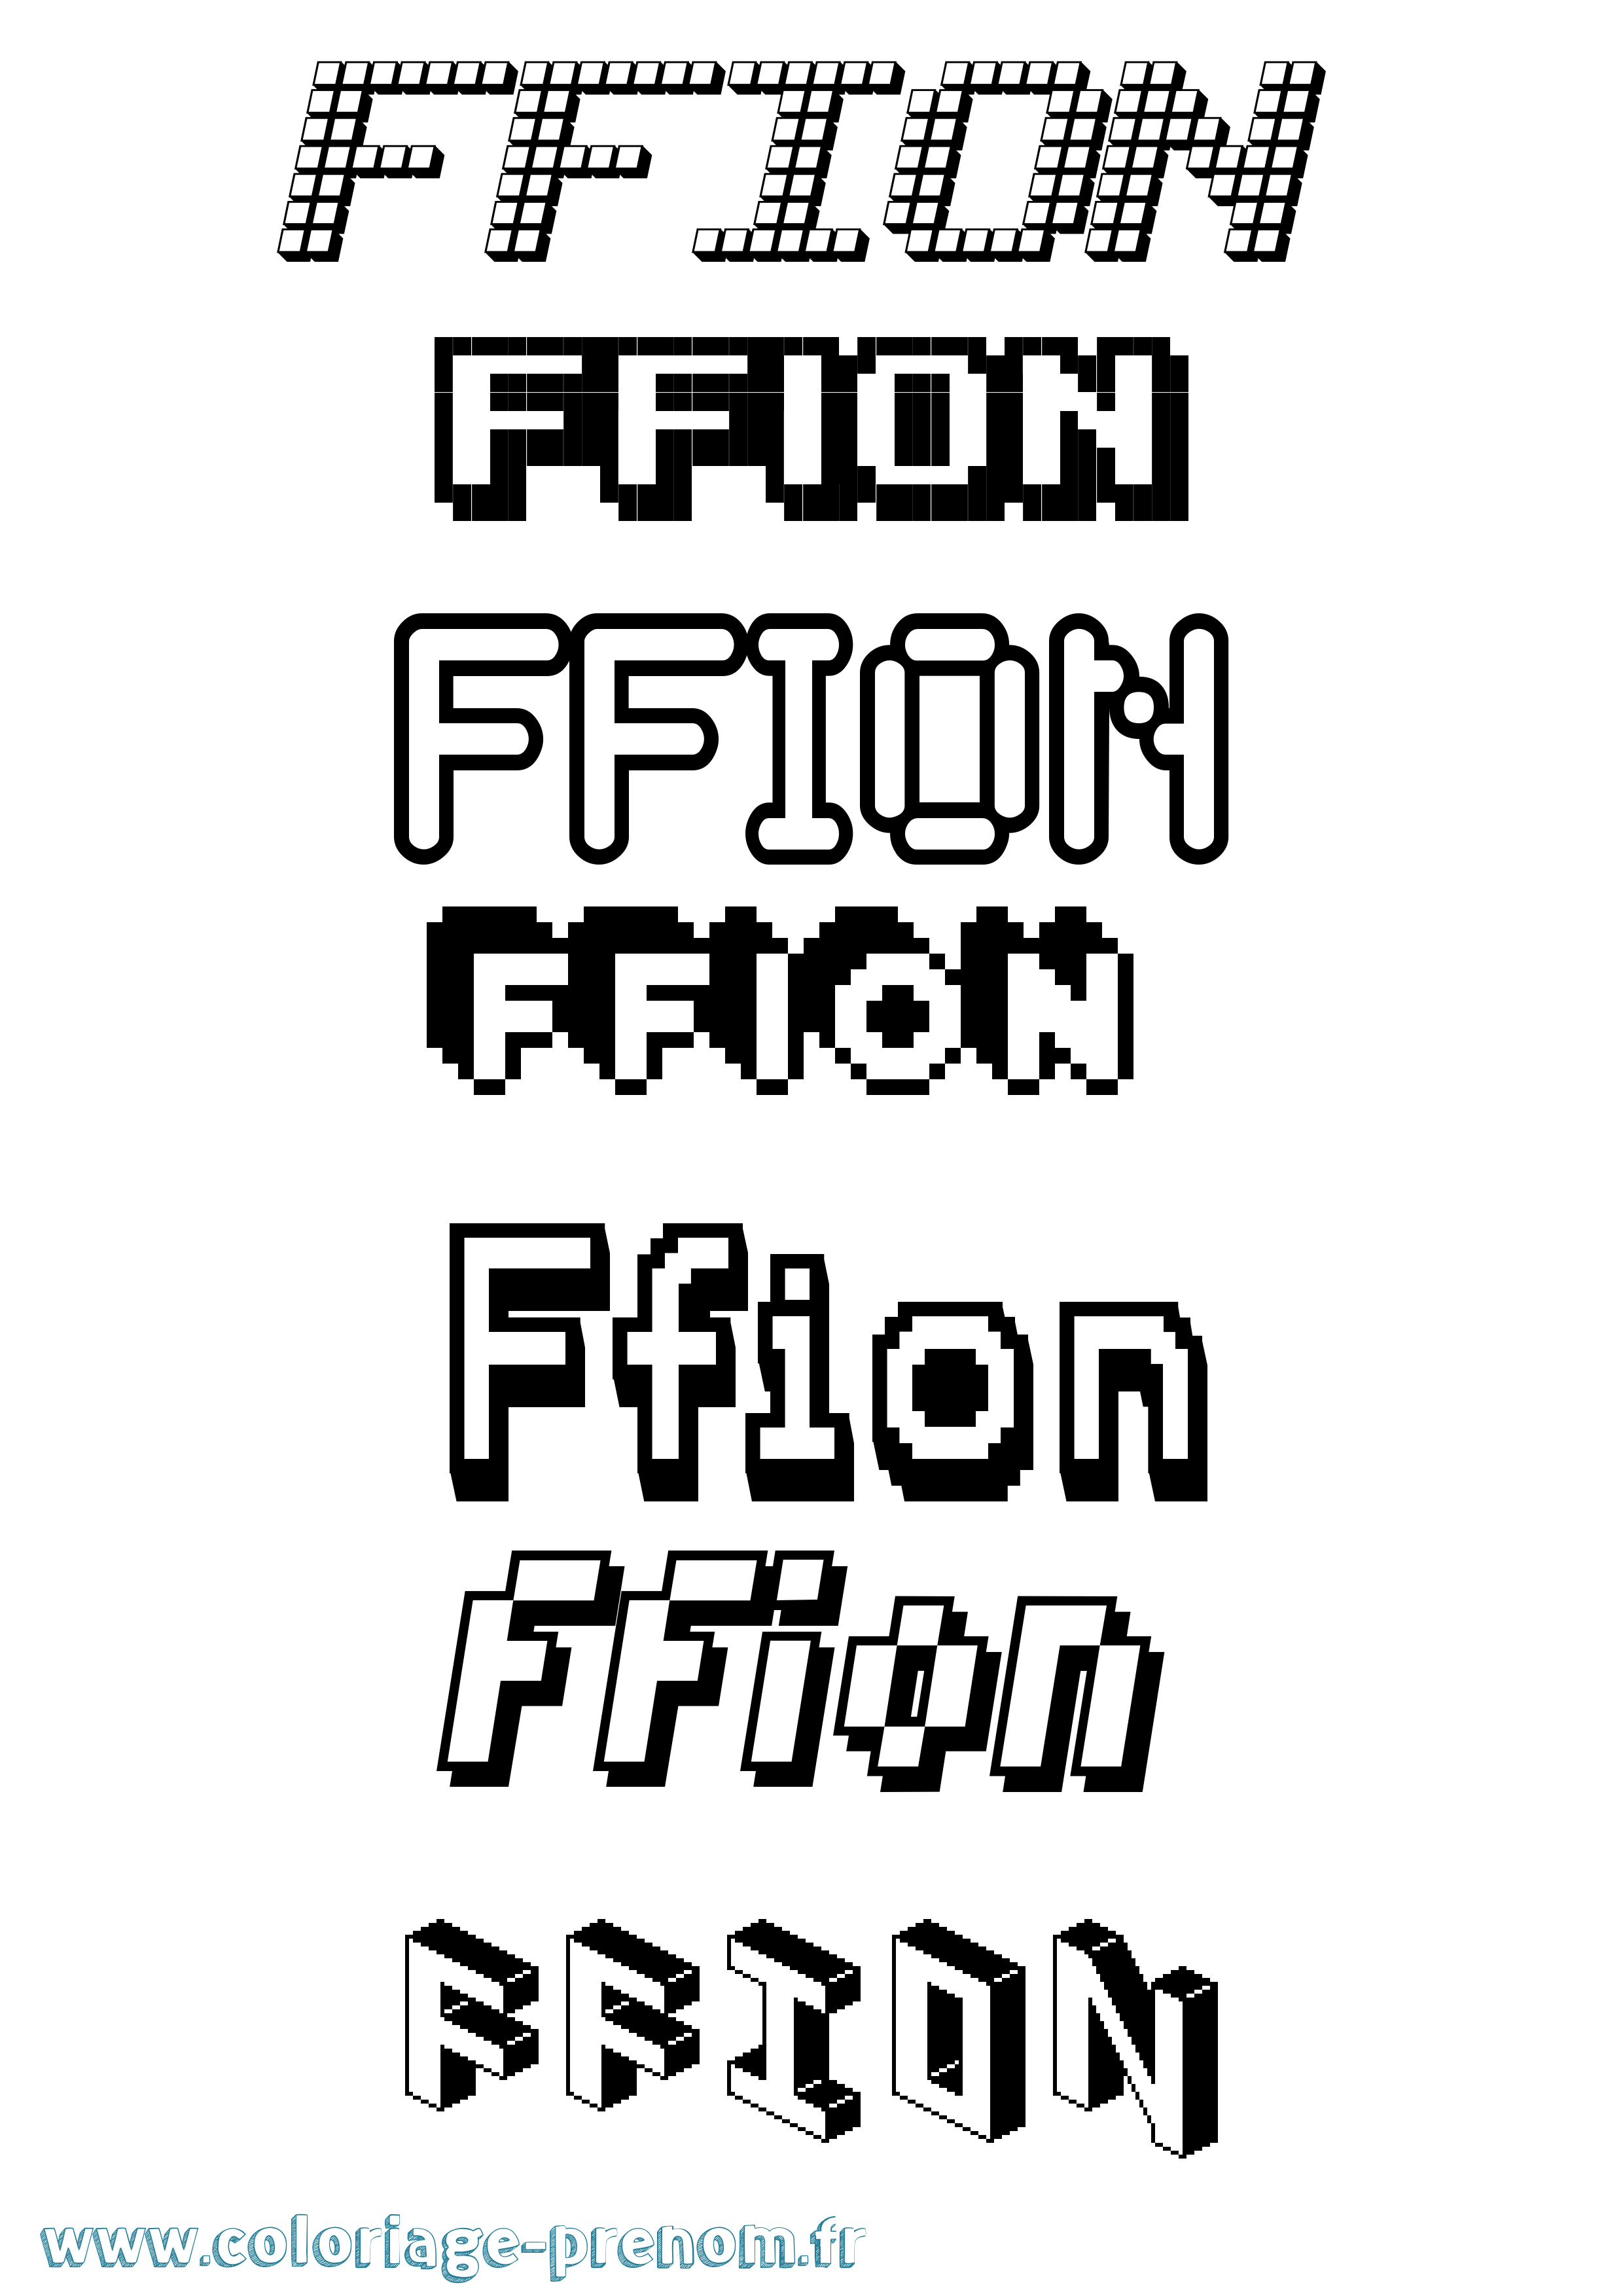 Coloriage prénom Ffion Pixel